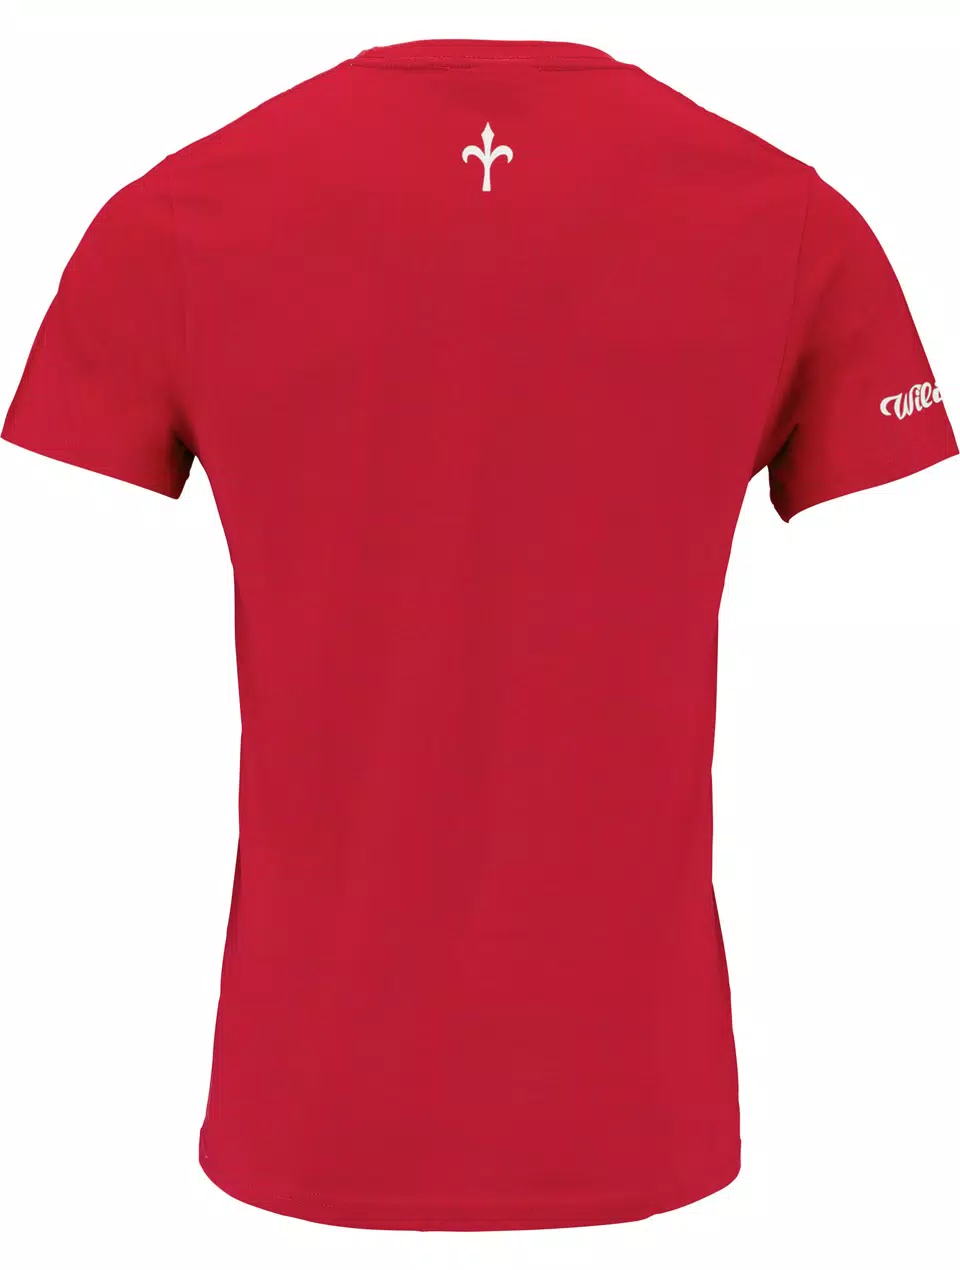 #Raisethebar T-Shirt red